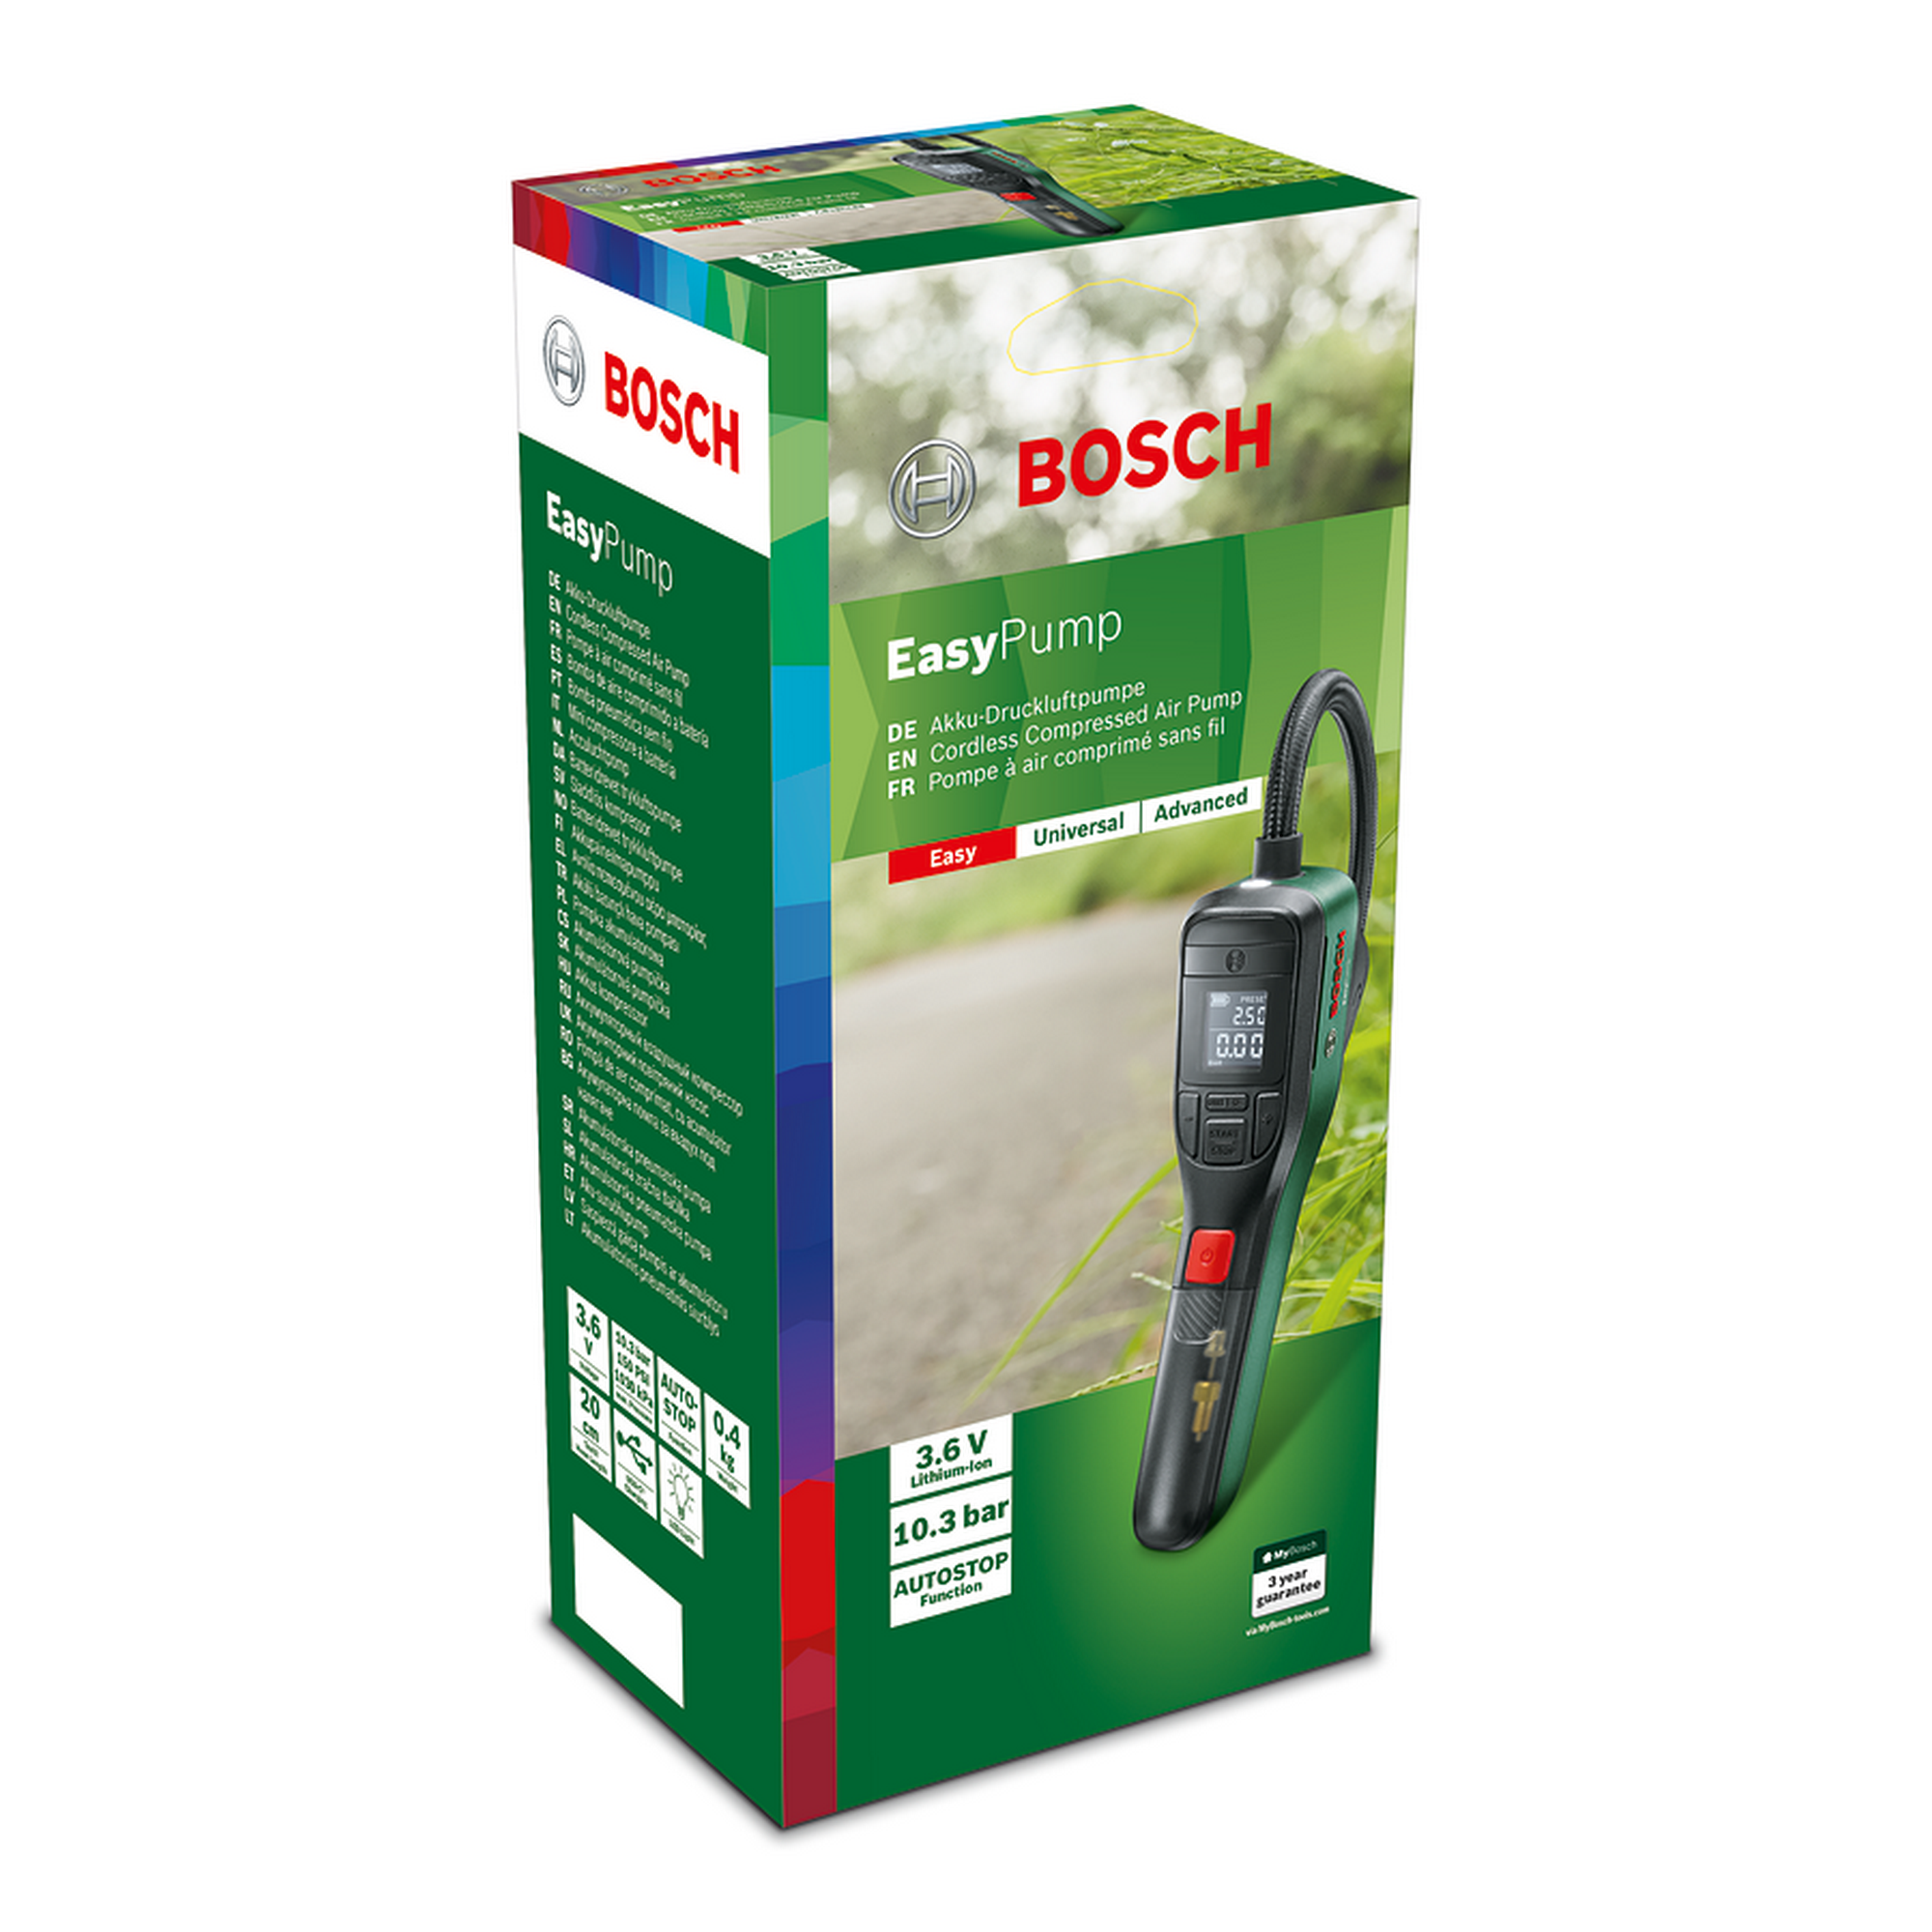 Bosch EasyPump Akku-Druckluftpumpe max 10,3 bar - TNC-Hamburg